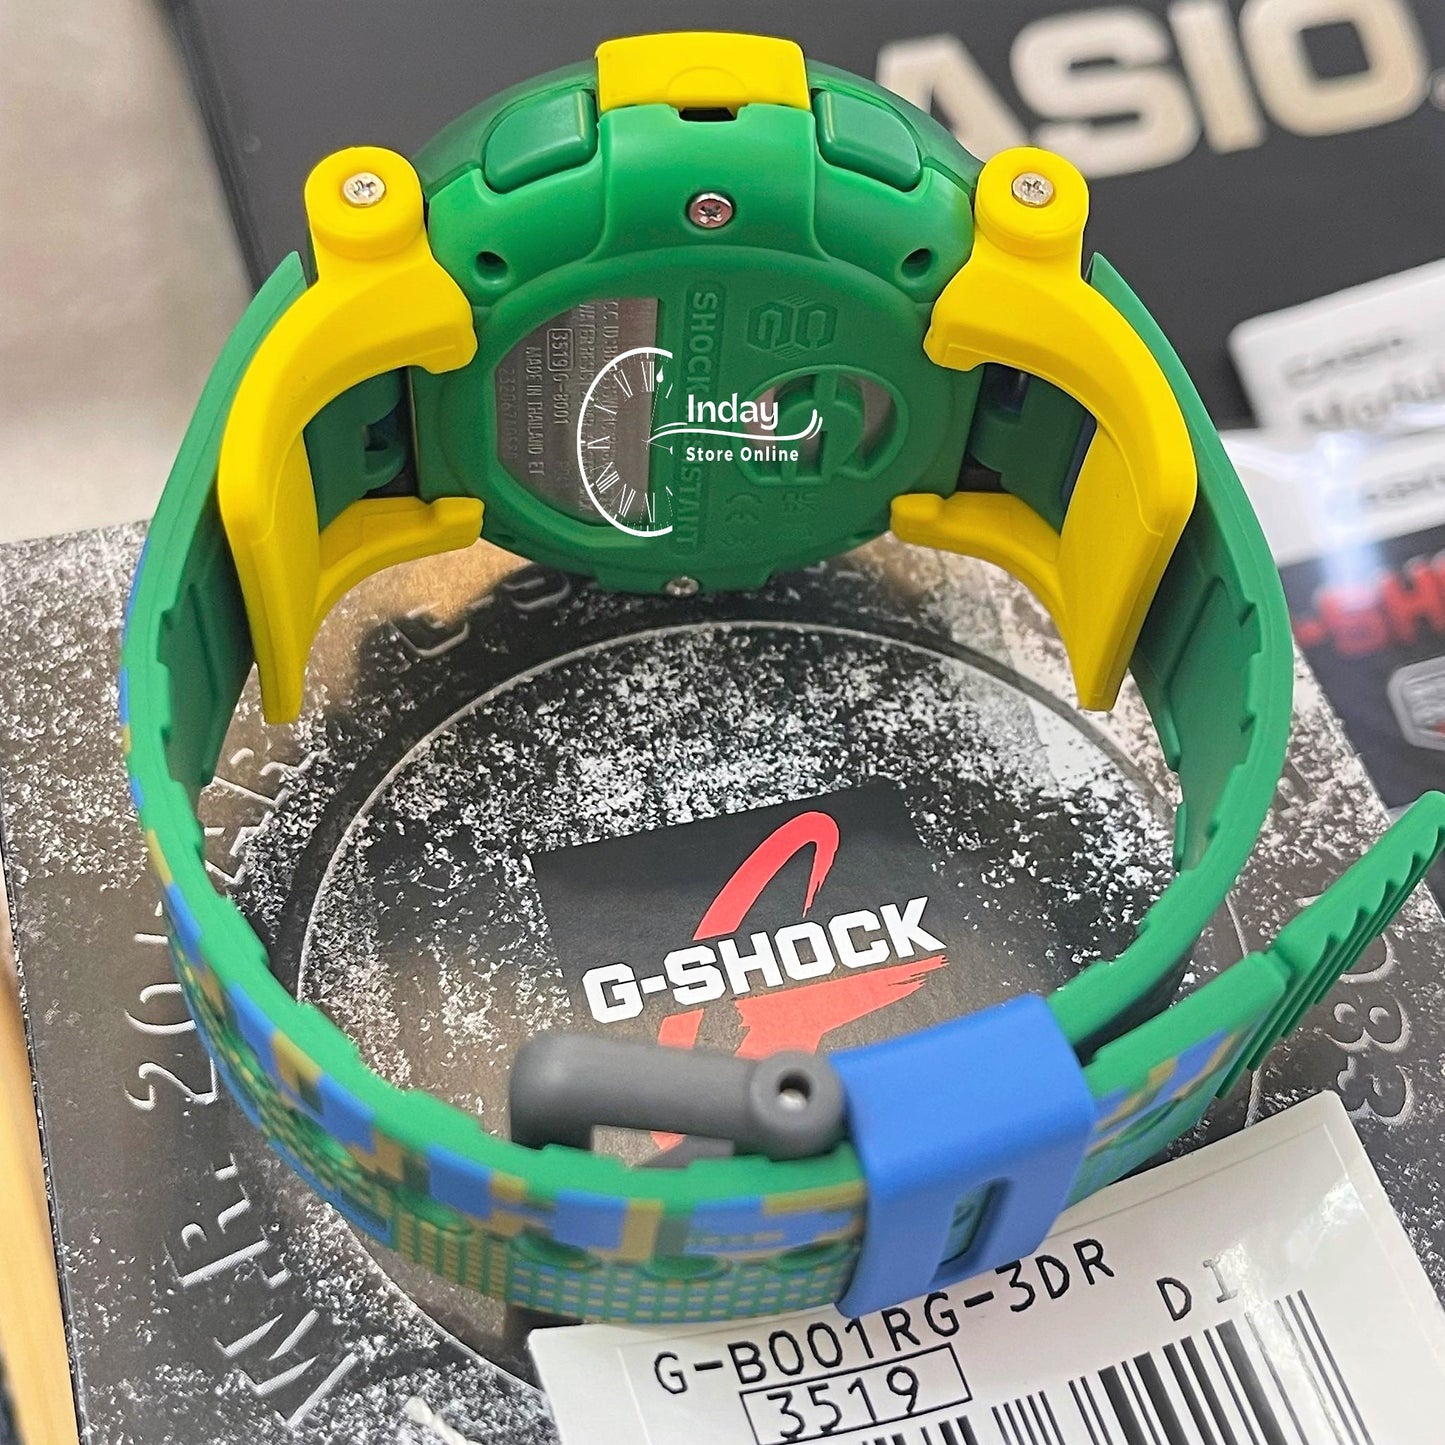 Casio G-Shock Men's Watch G-B001RG-3 Digital DW-001 Series Retro Gaming Graphics Interchangeable Translucent Bands